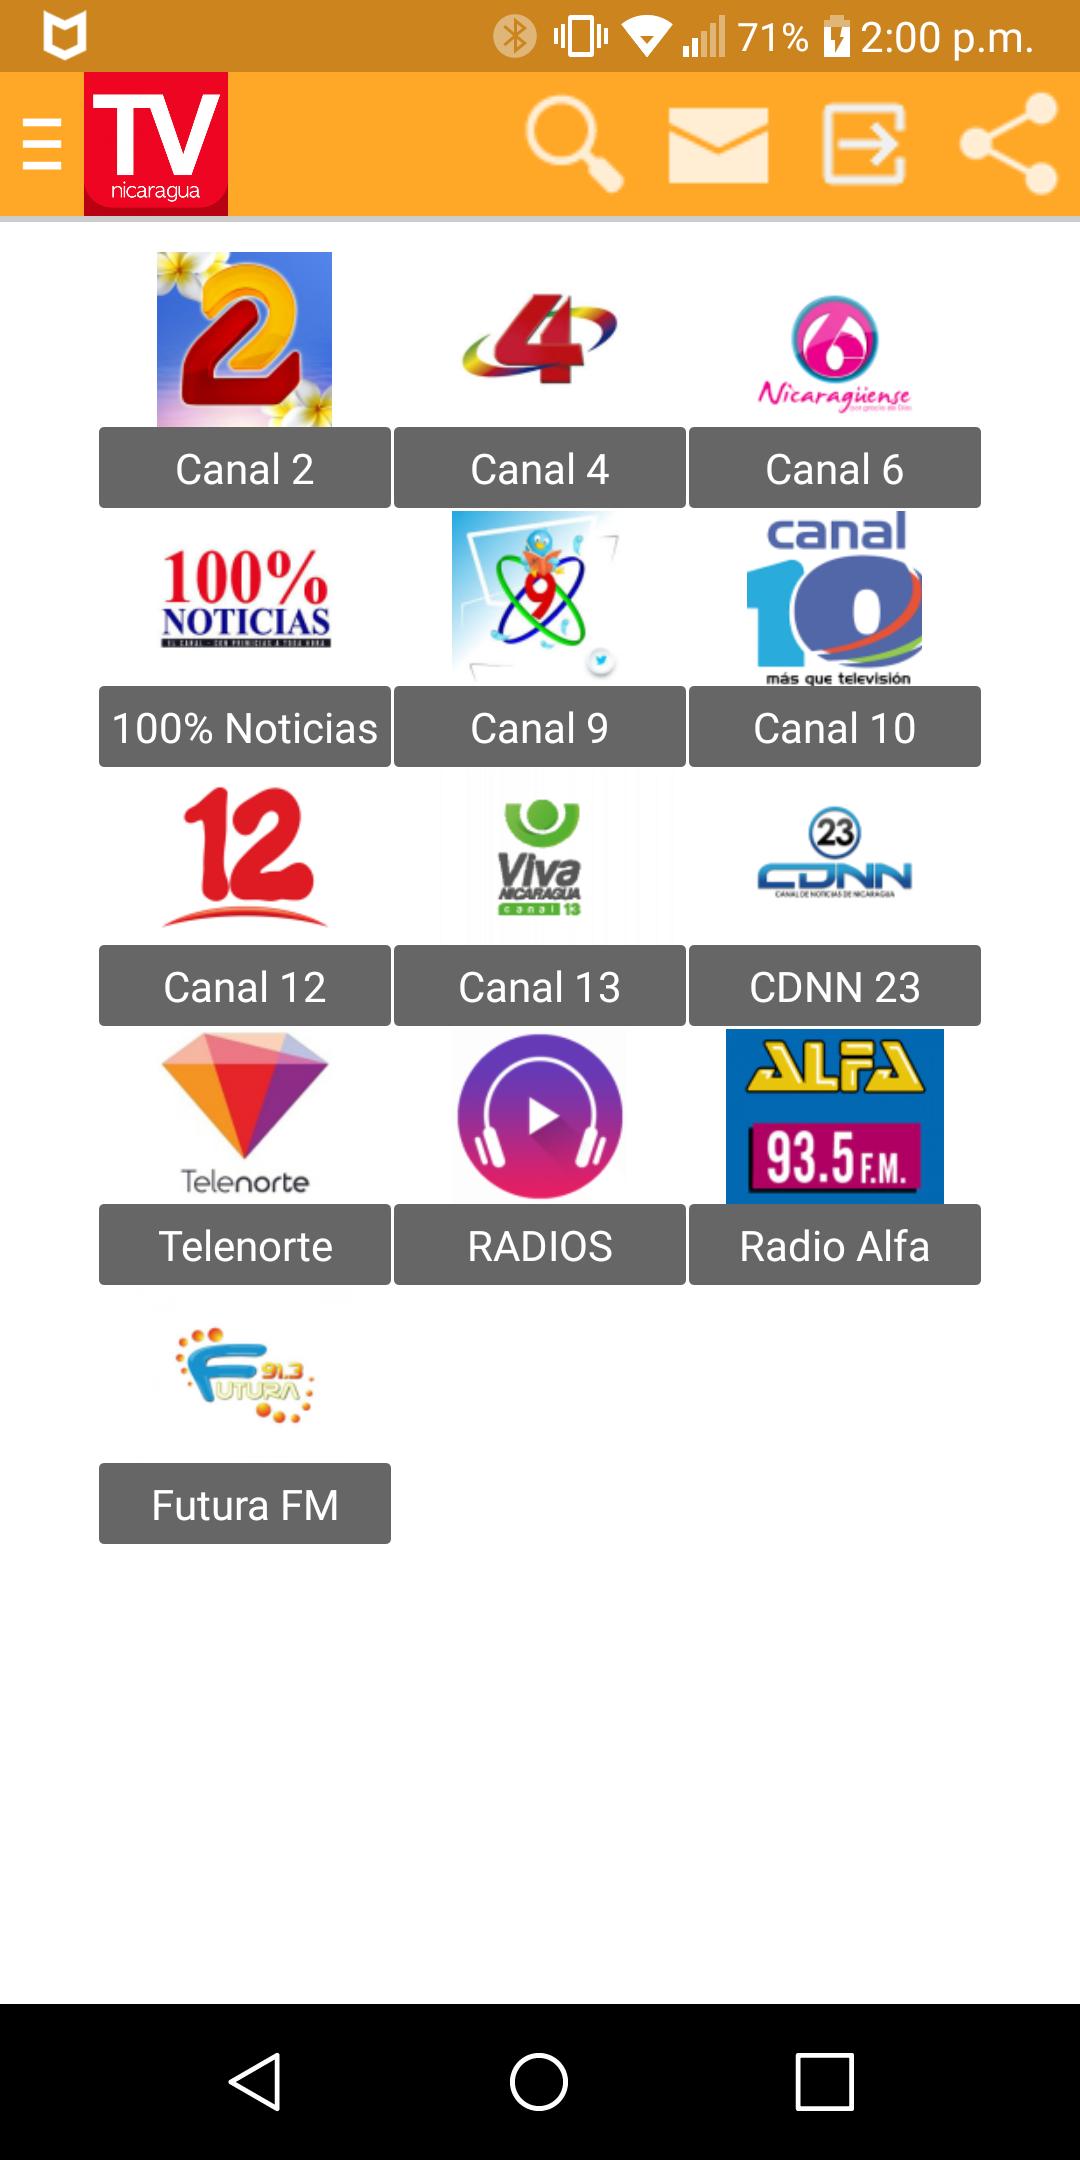 TV Nicaragua en Vivo Gratis! for Android - APK Download